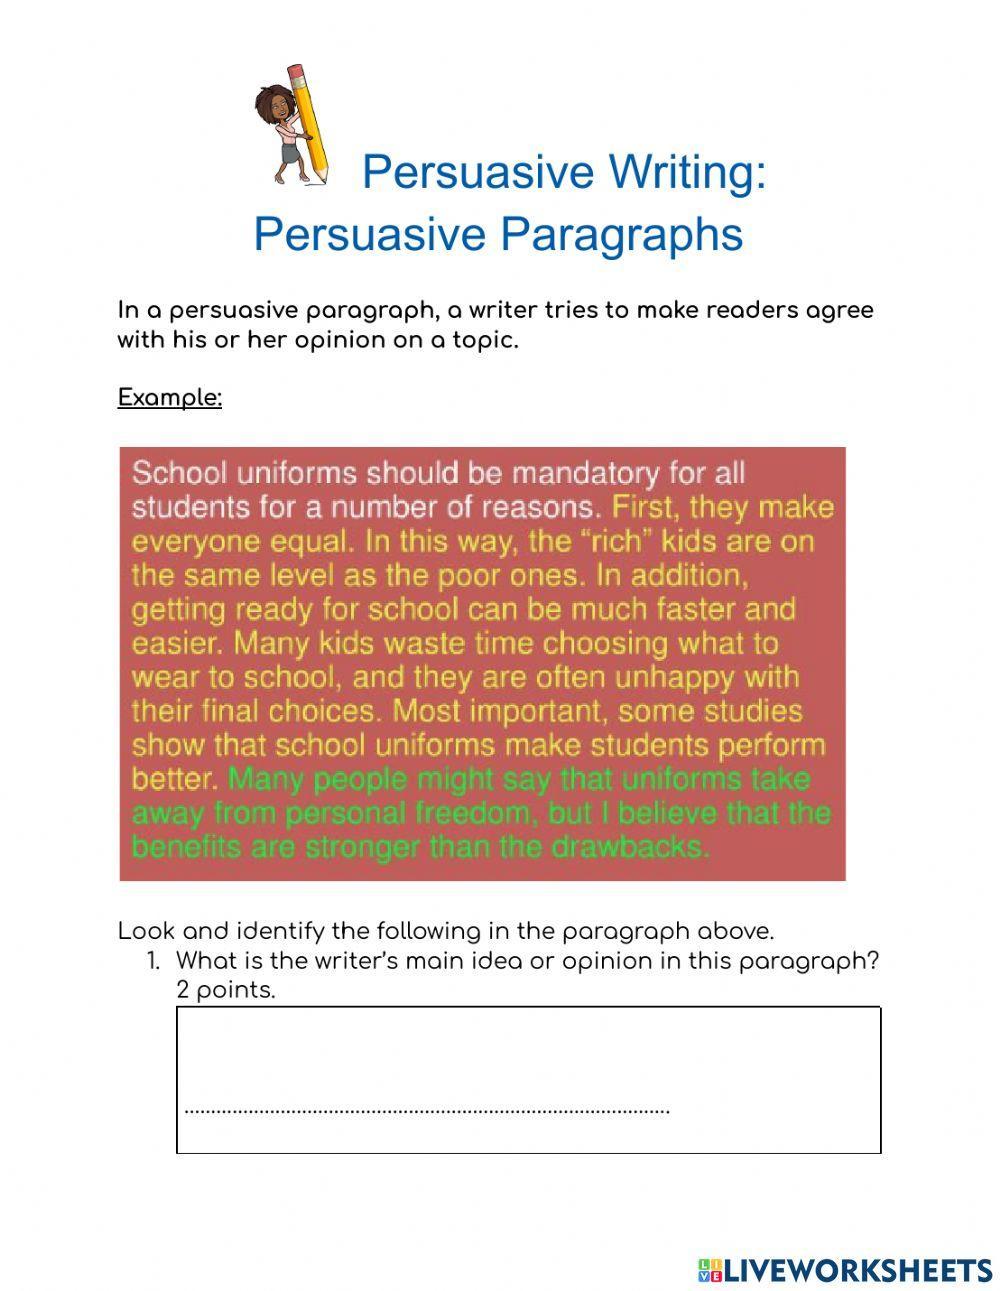 Persuasive Writing: The Persuasive Paragraph